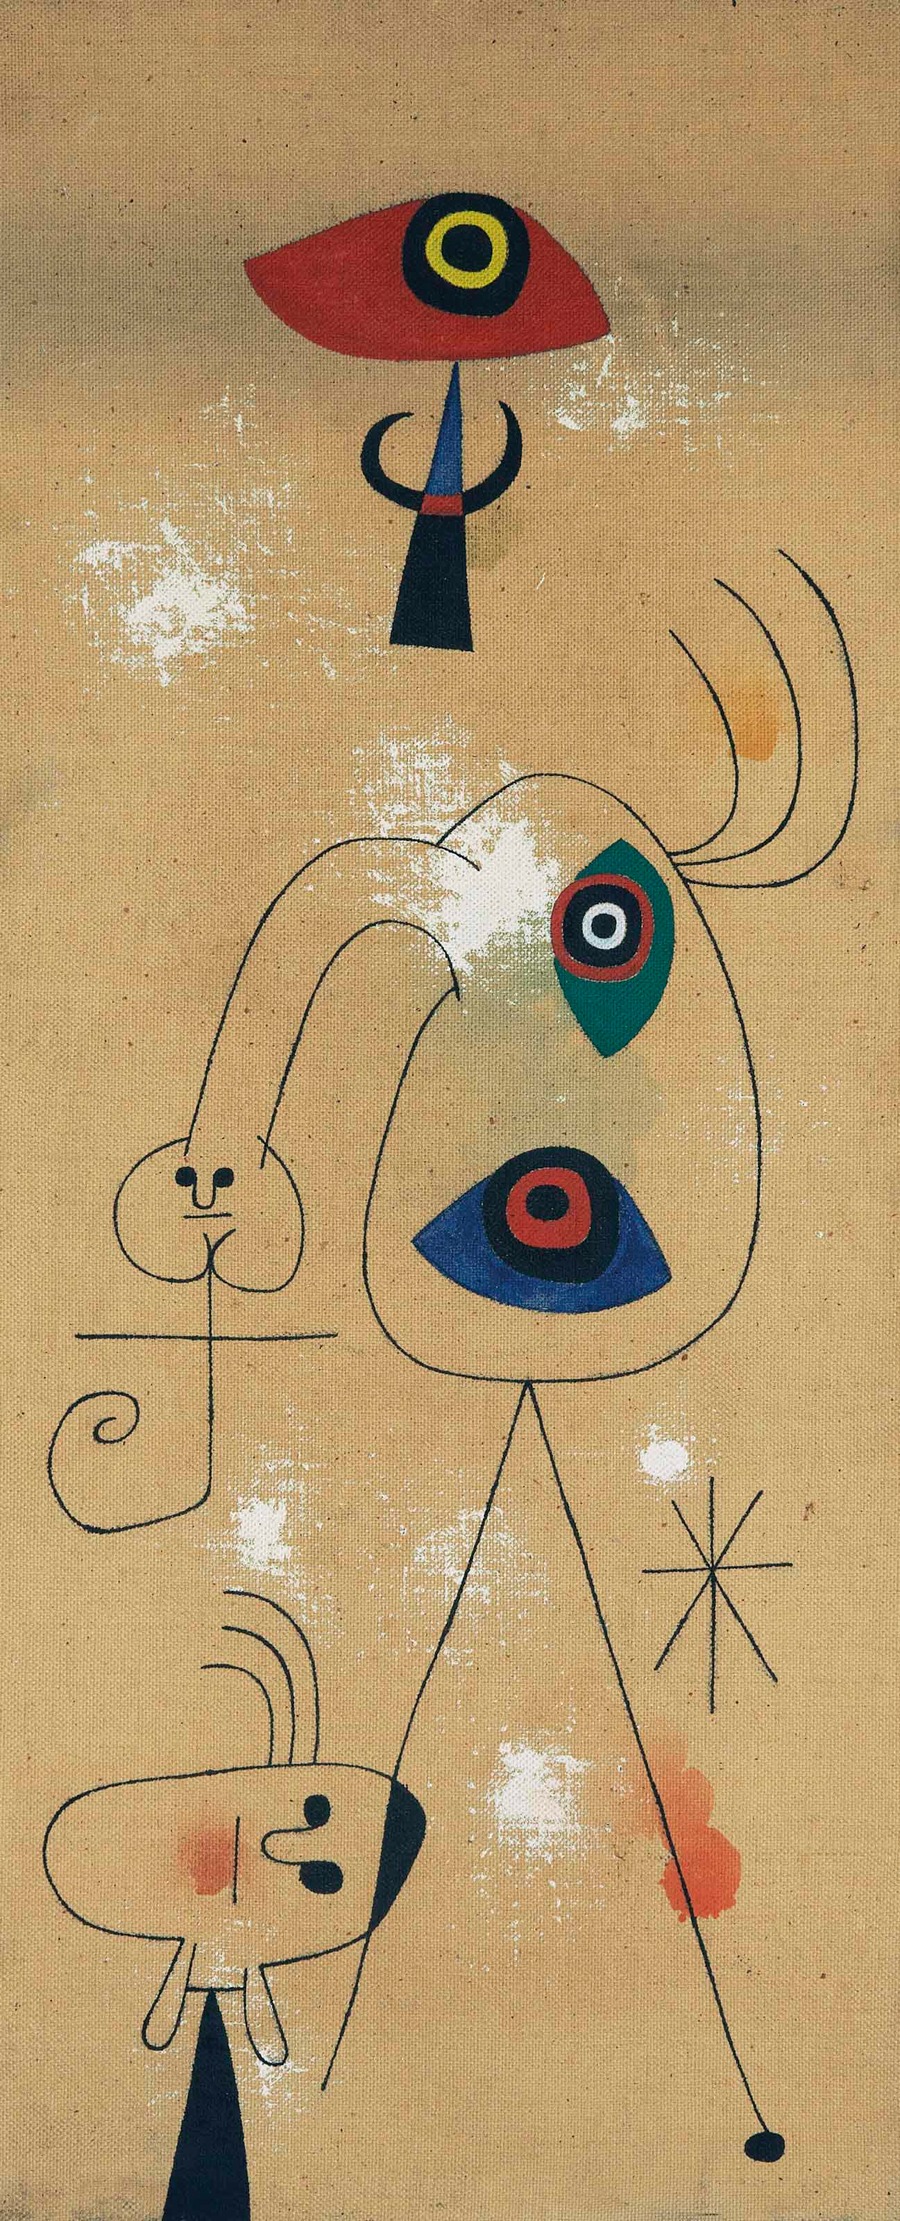 Femmes et oiseaux dans la nuit by Joan Miró - Artvee